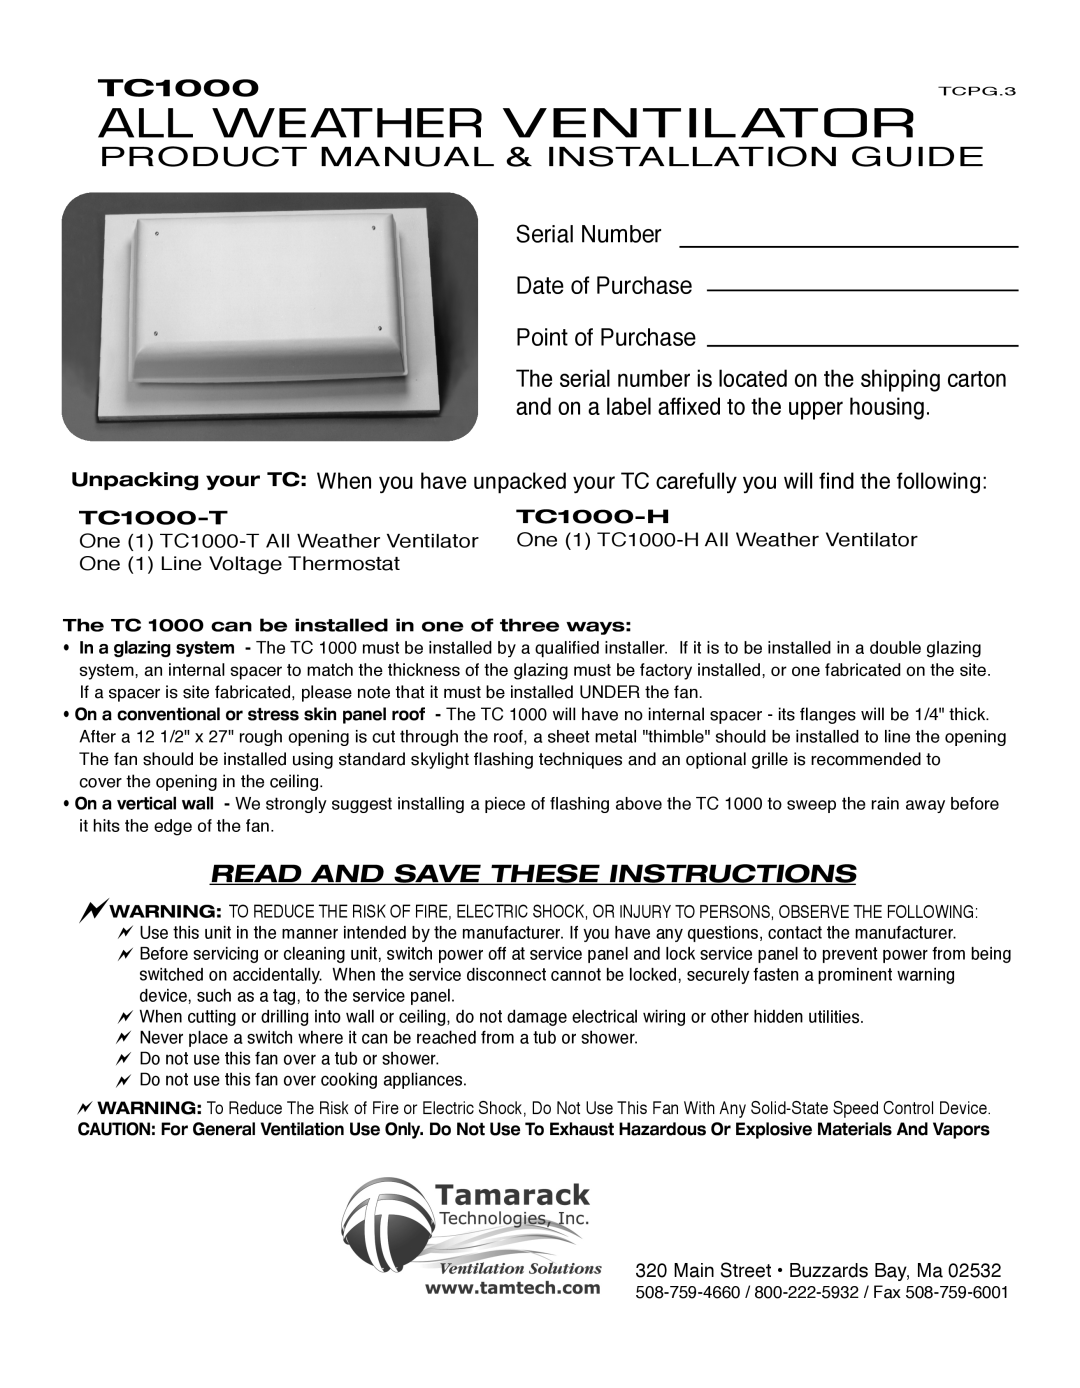 Tamarack Technologies TC1000 manual All Weather VENTILATOR, Product Manual & Installation Guide 